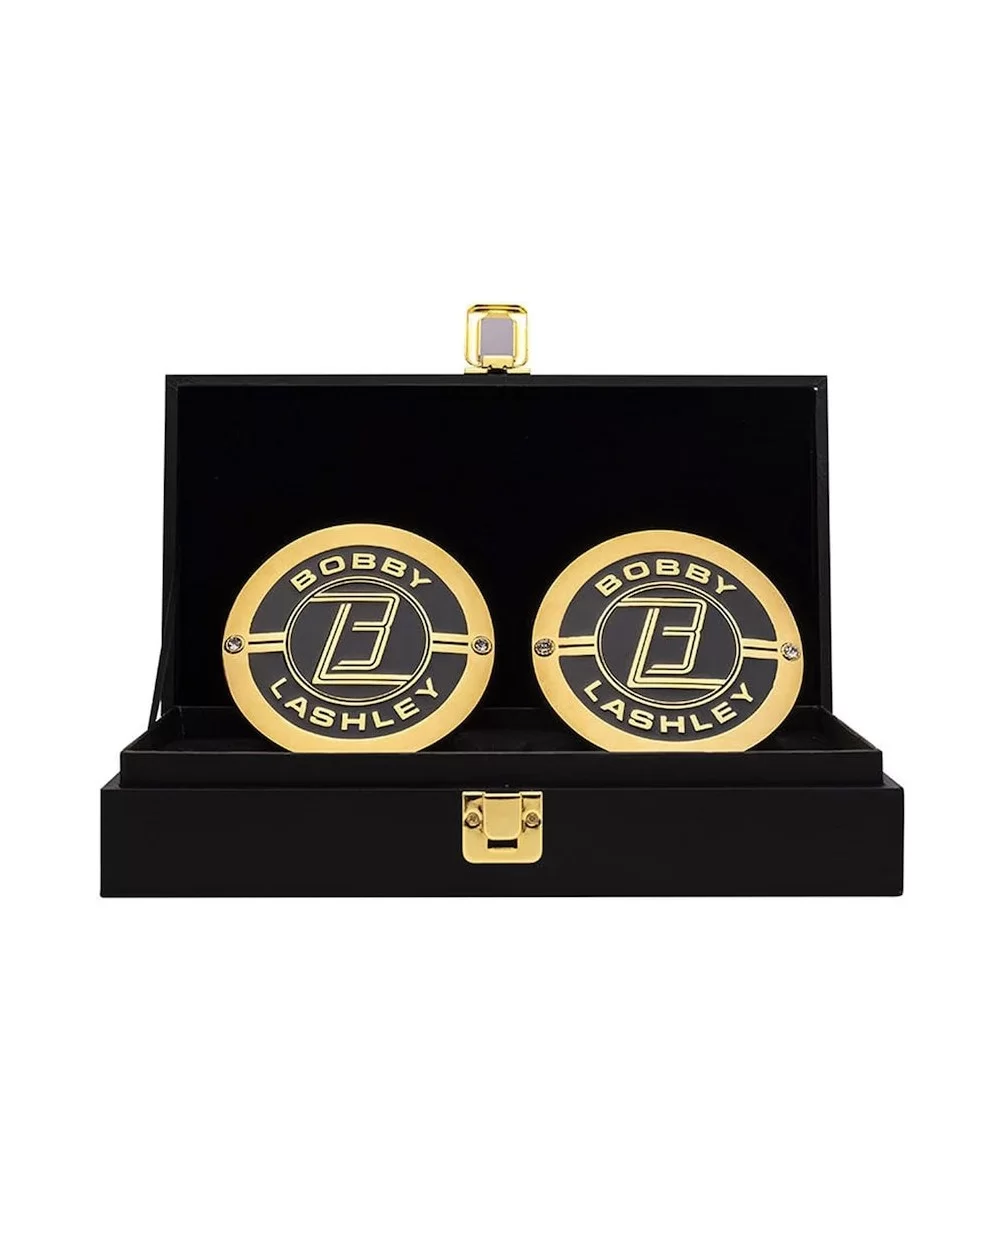 Bobby Lashley Championship Replica Side Plate Box Set $21.28 Title Belts